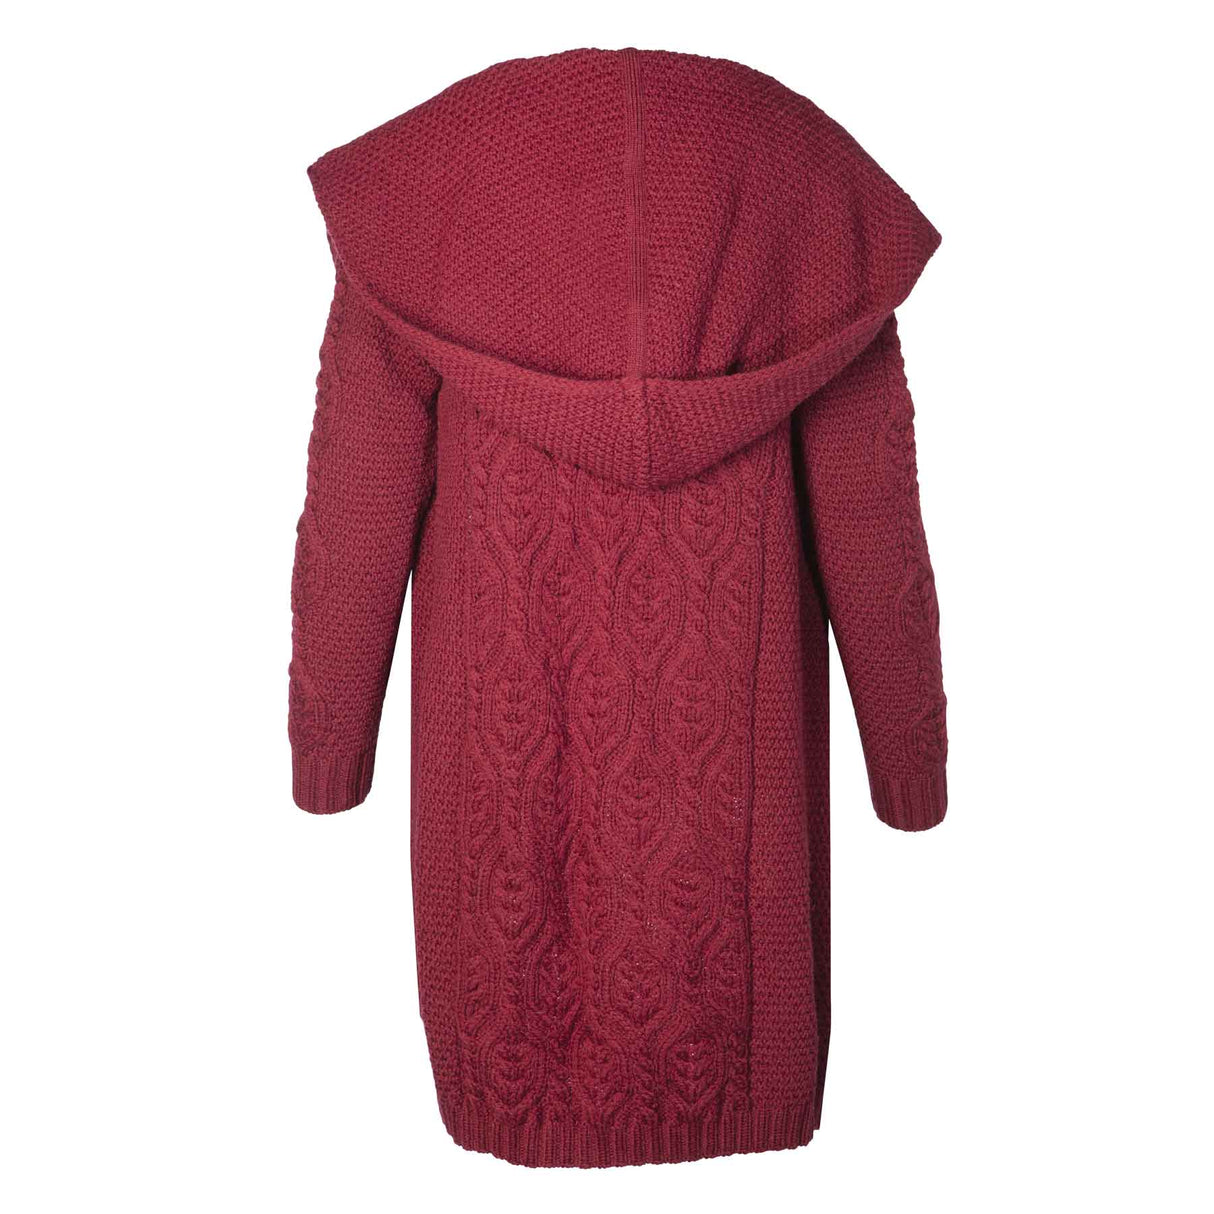 Hooded Aran Knit Long Cardigan- Berry - Creative Irish Gifts